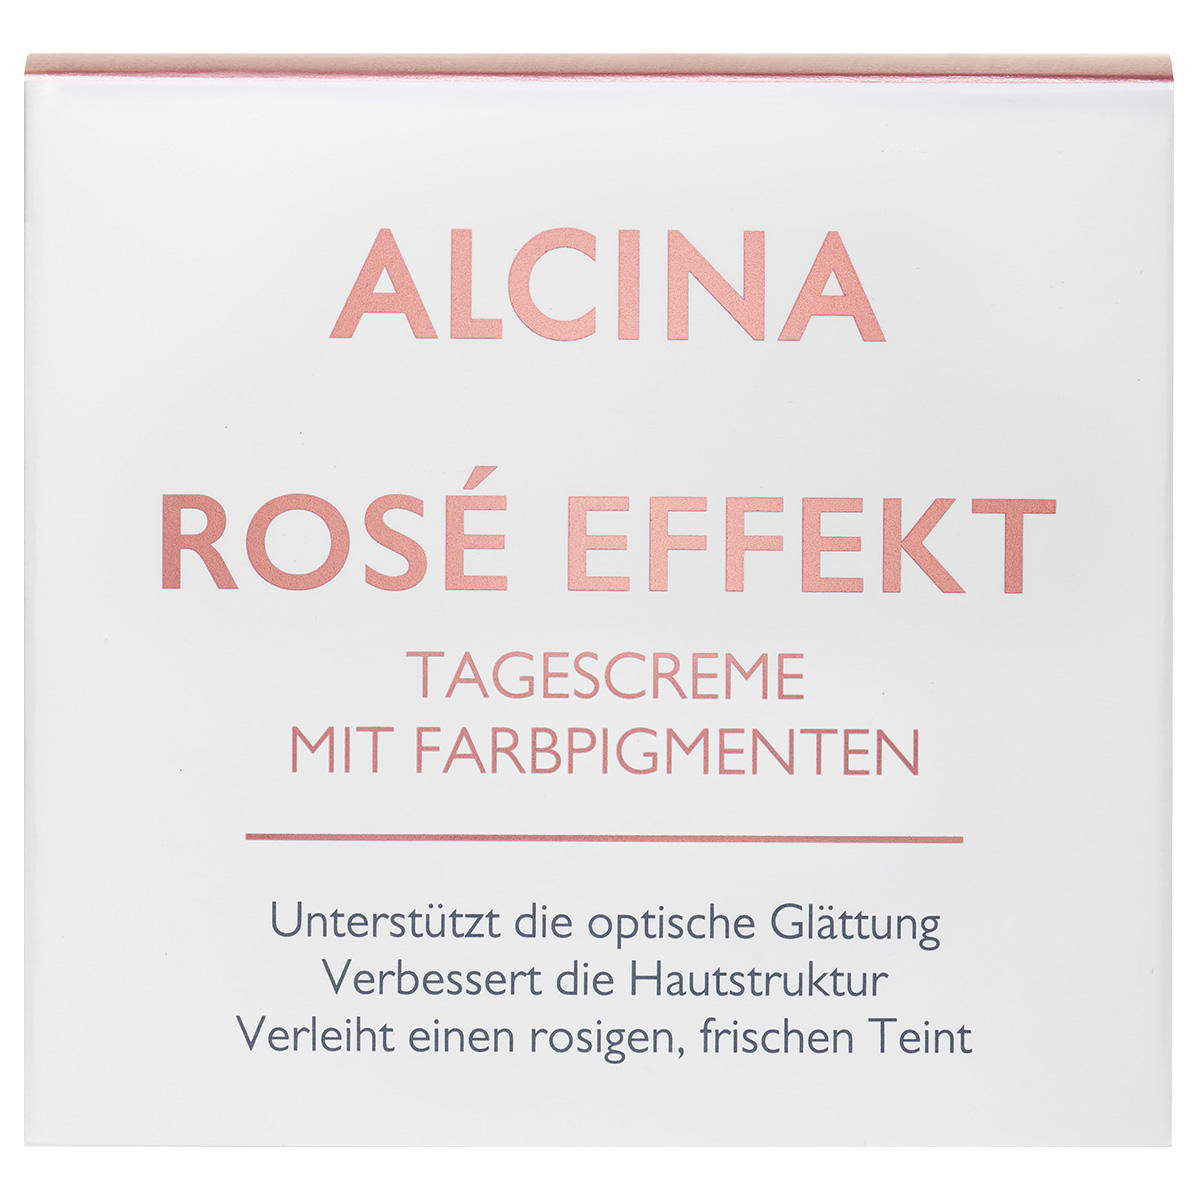 Alcina Rosé Effekt Day cream 50 ml - 3